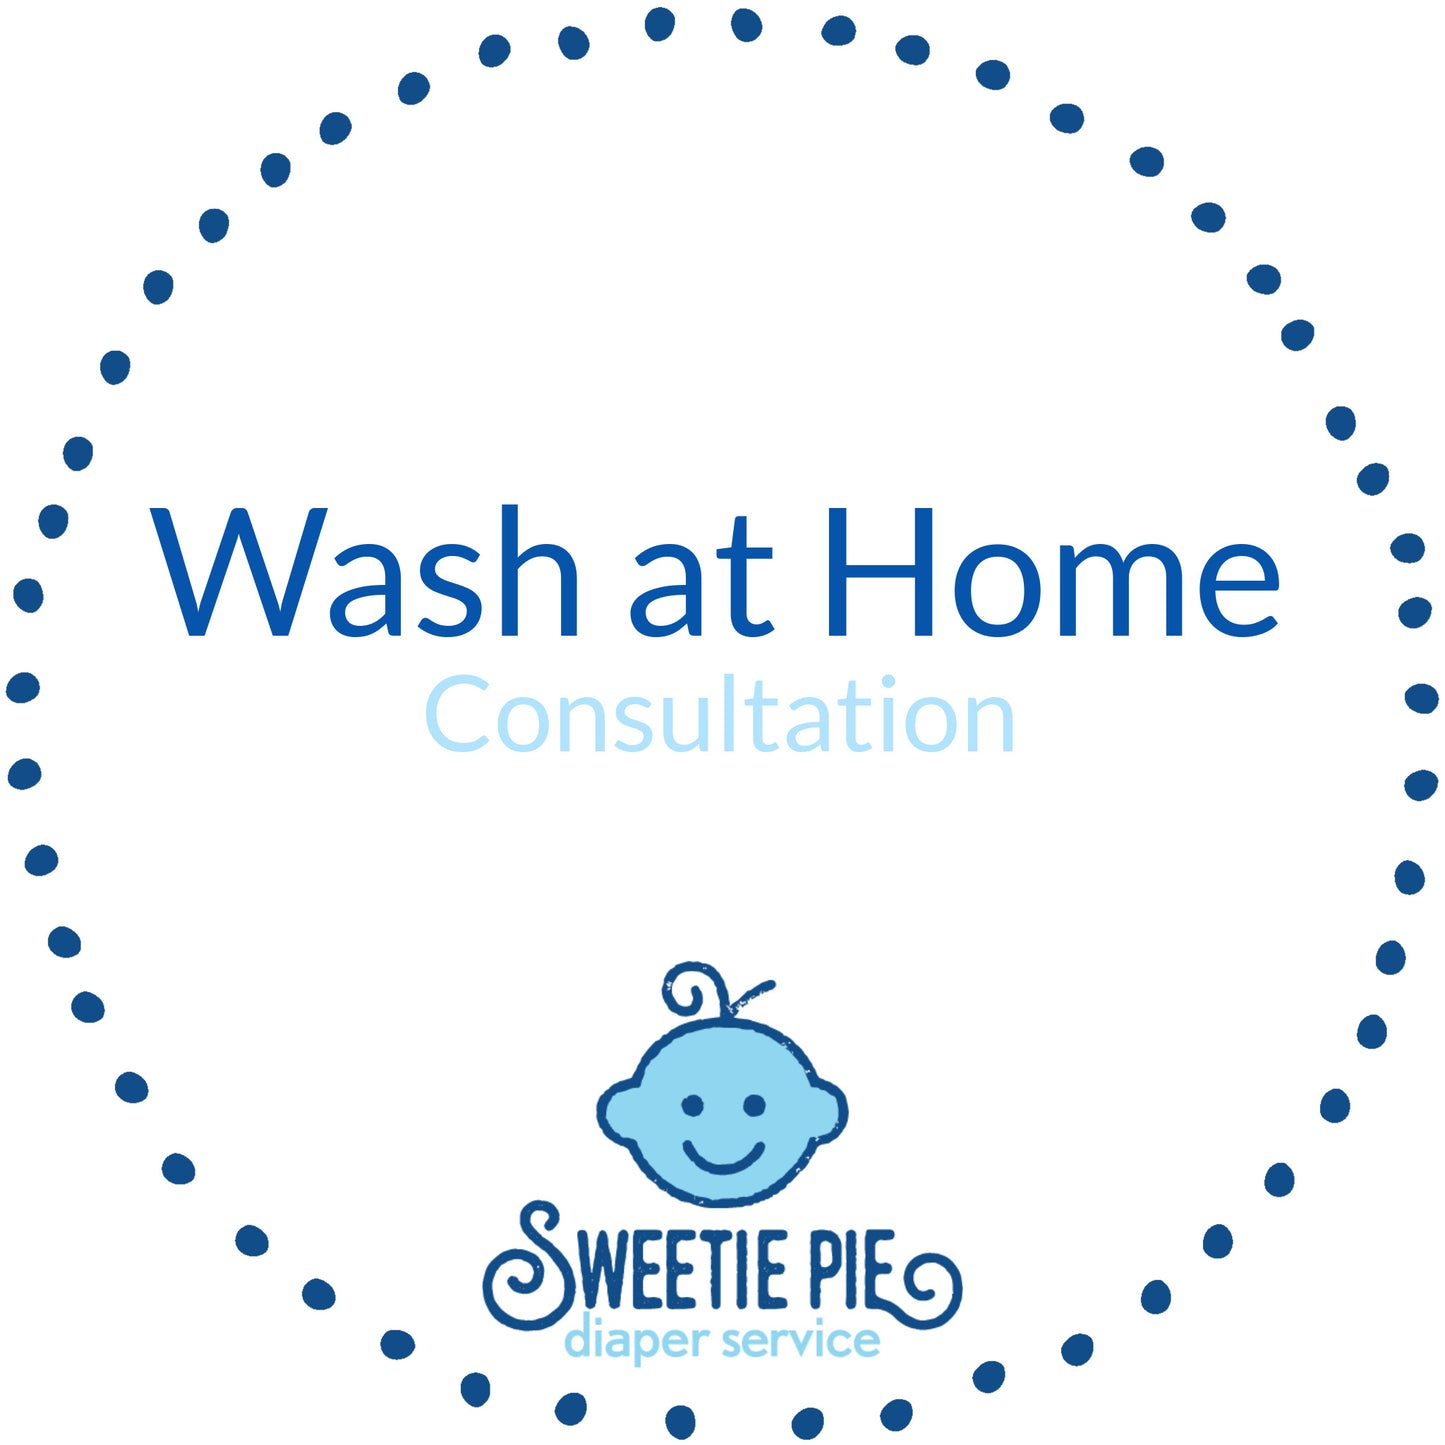 Wash at Home Consultation